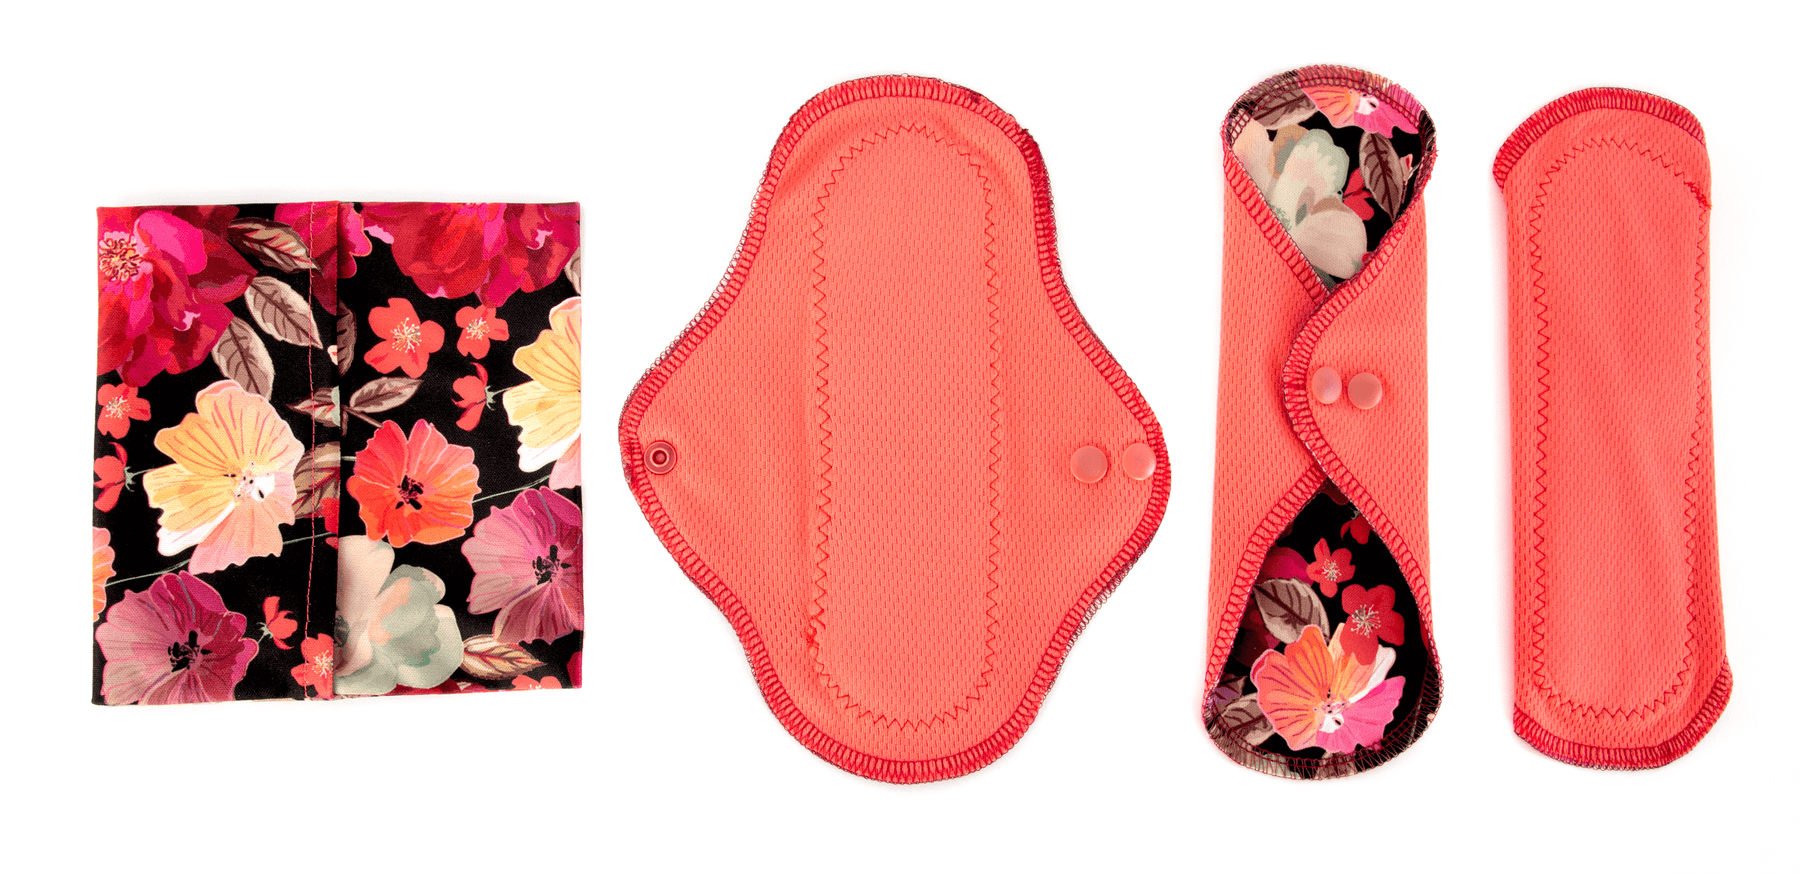 How to Make Reusable Period Underwear - Spoonflower Blog